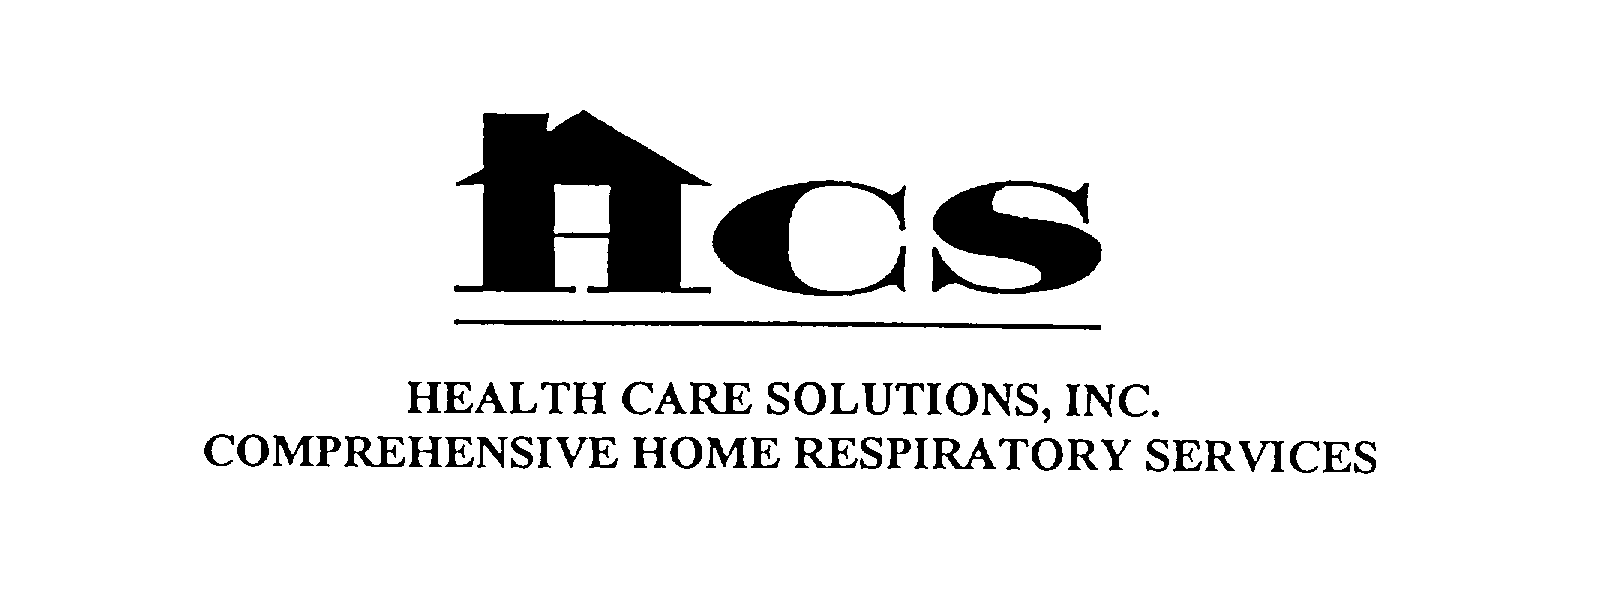  HCS HEALTH CARE SOLUTIONS, INC. COMPREHENSIVE HOME RESPIRATORY SERVICES